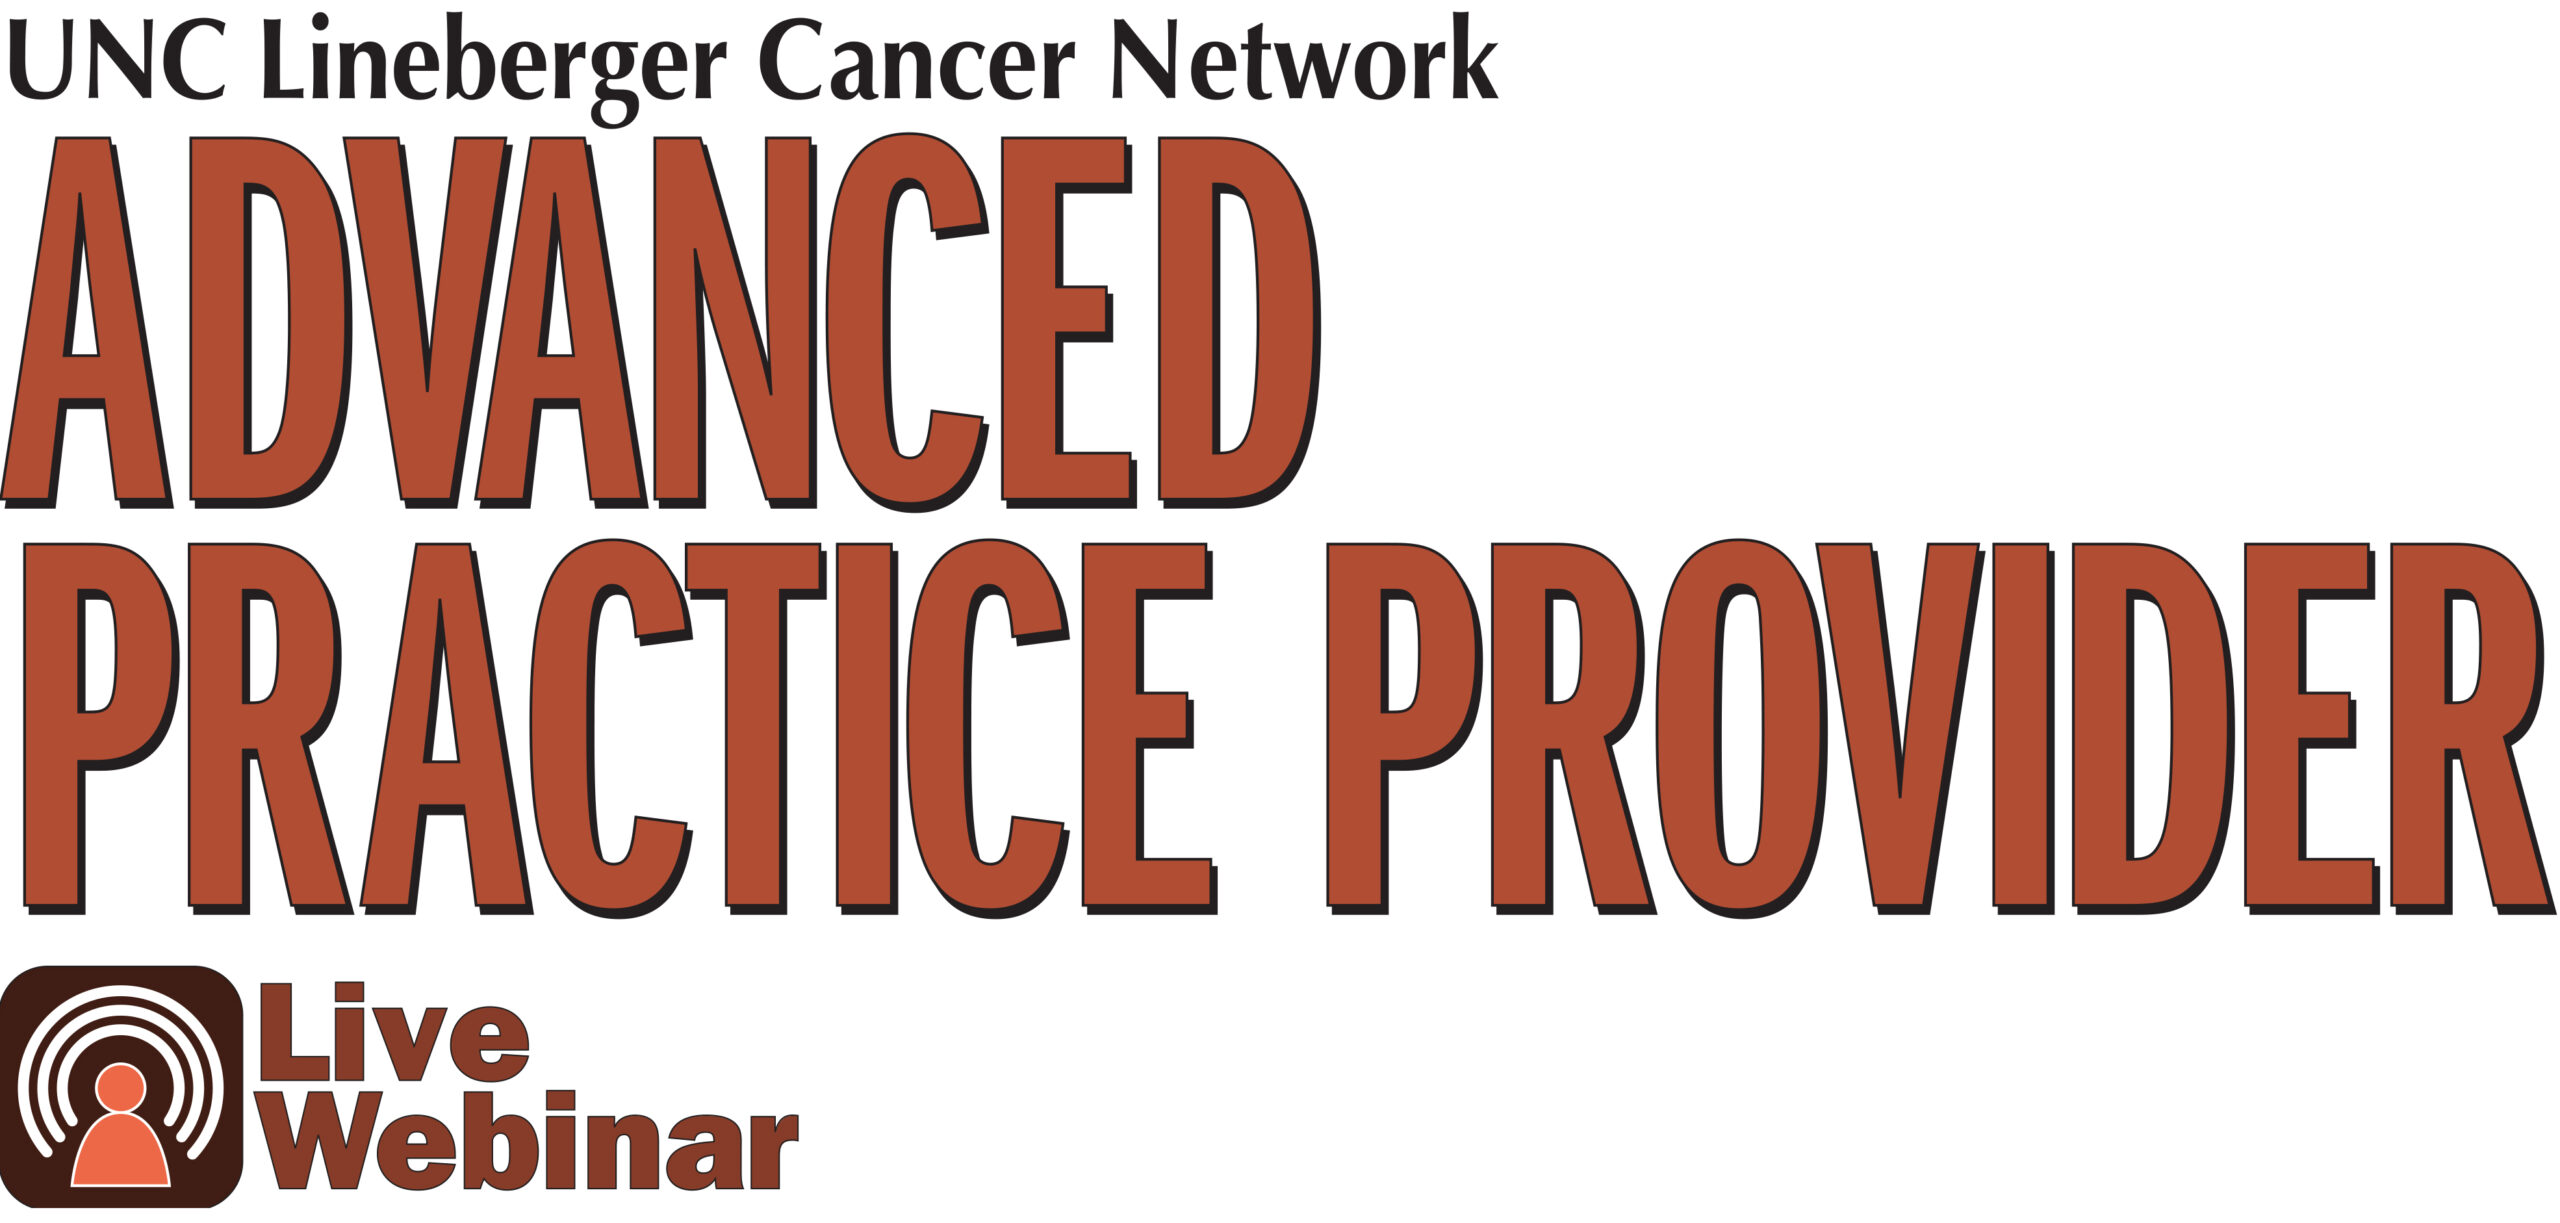 UNCLCN Presents an Advanced Practice Provider Webinar